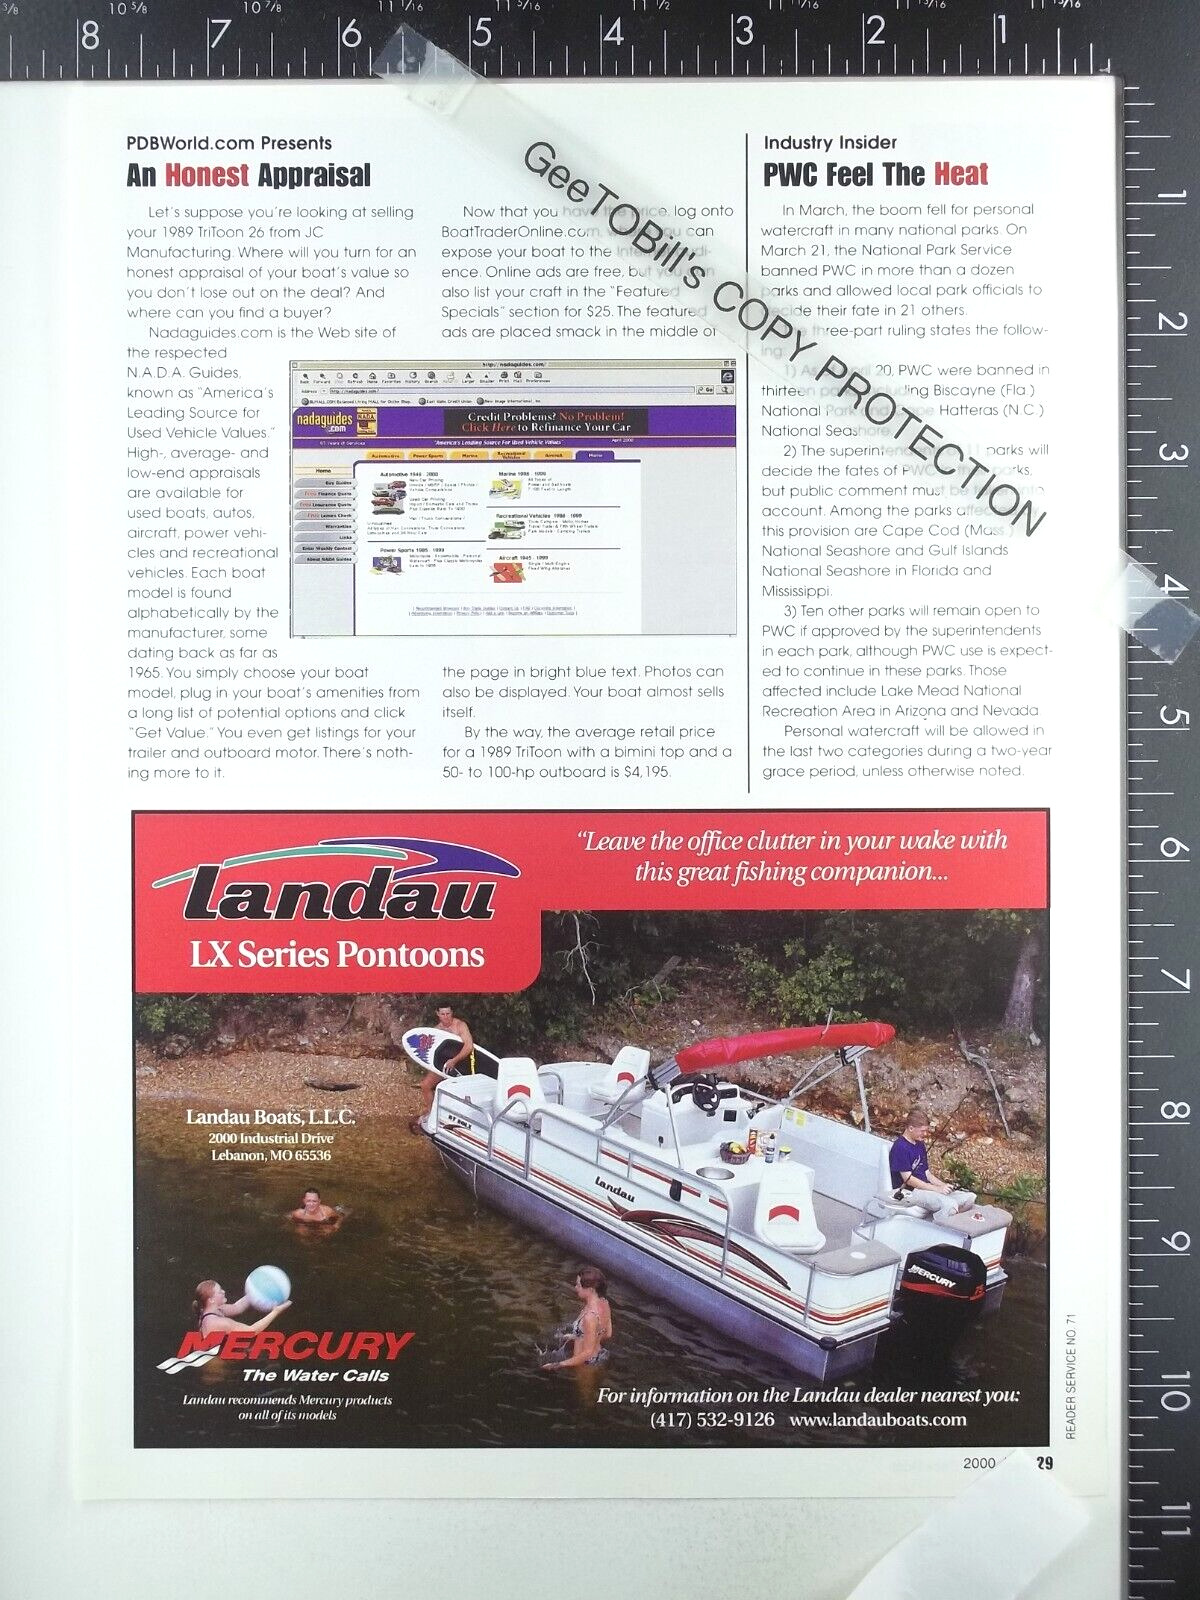 2000 ADVERTISING for Odyssey 2103 2102 Millenium & Landau BT-20LX pontoon boat